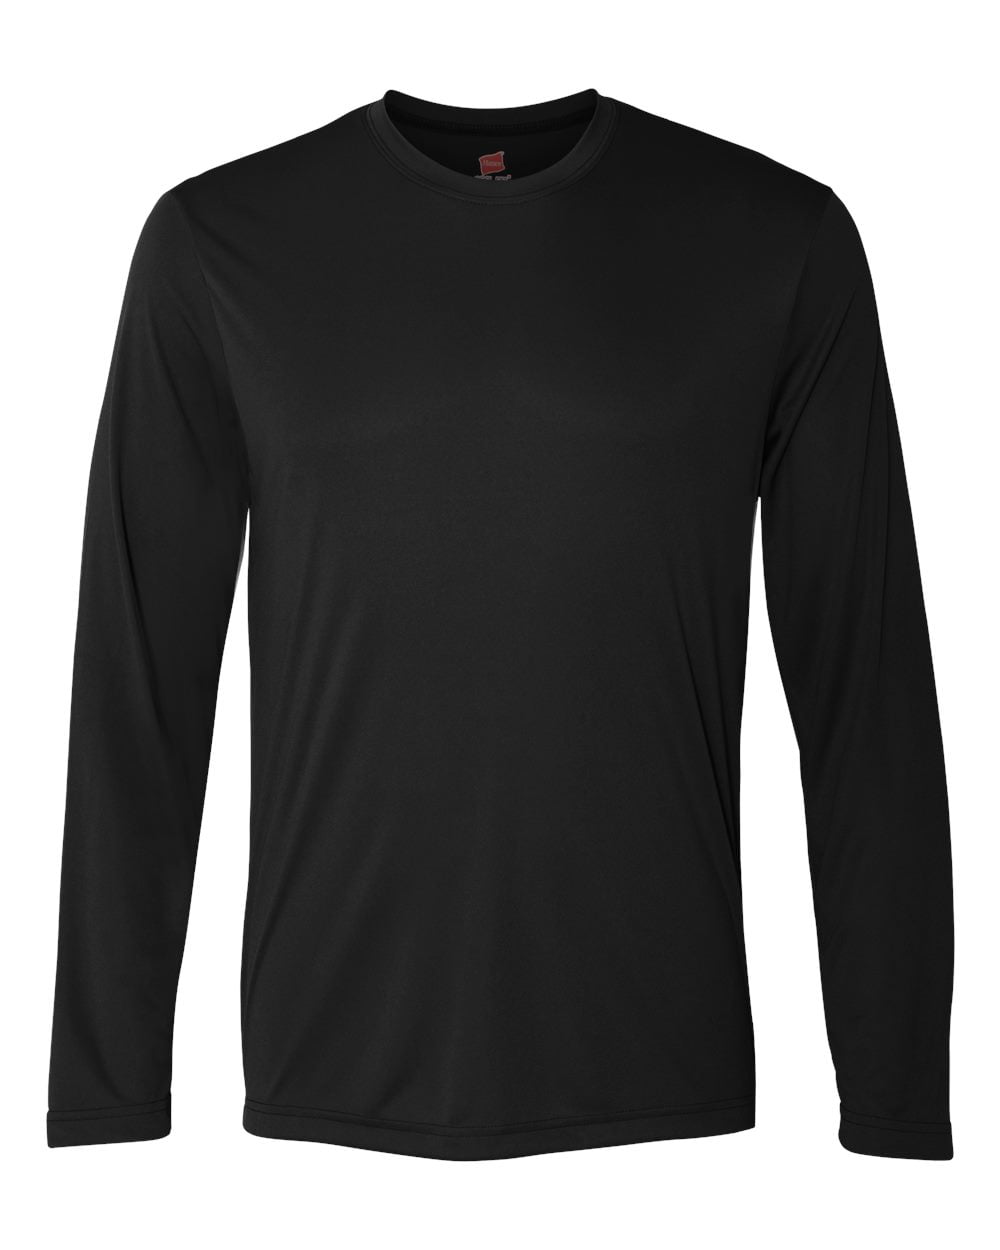 Hanes Cool Dri® Long Sleeve Performance T-Shirt - Walmart.com